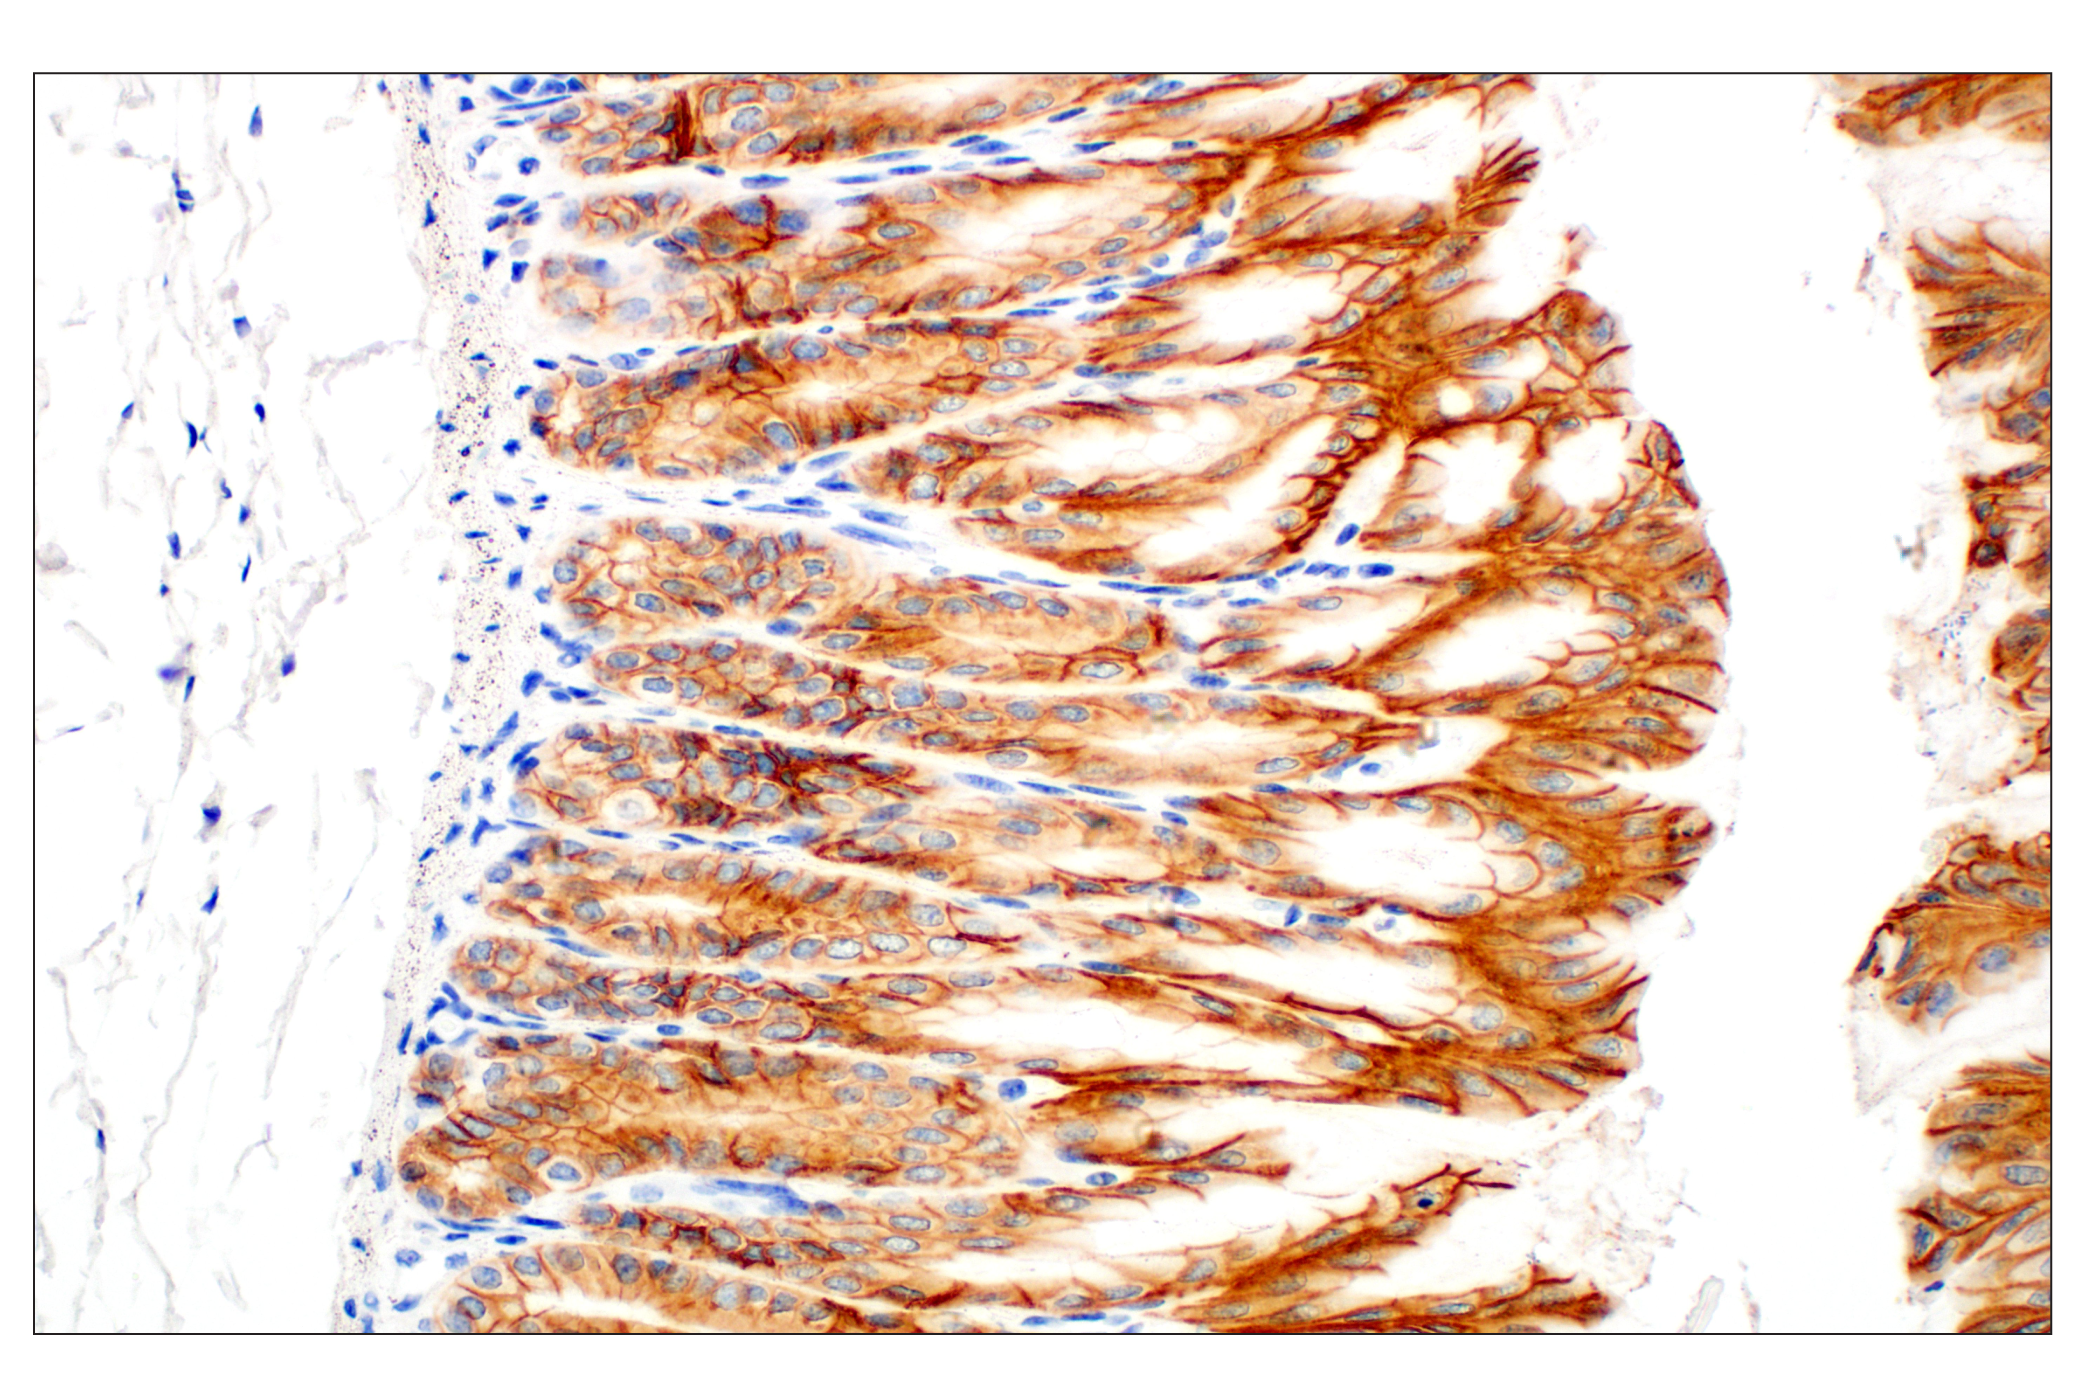  Image 64: Epithelial-Mesenchymal Transition (EMT) Antibody Sampler Kit